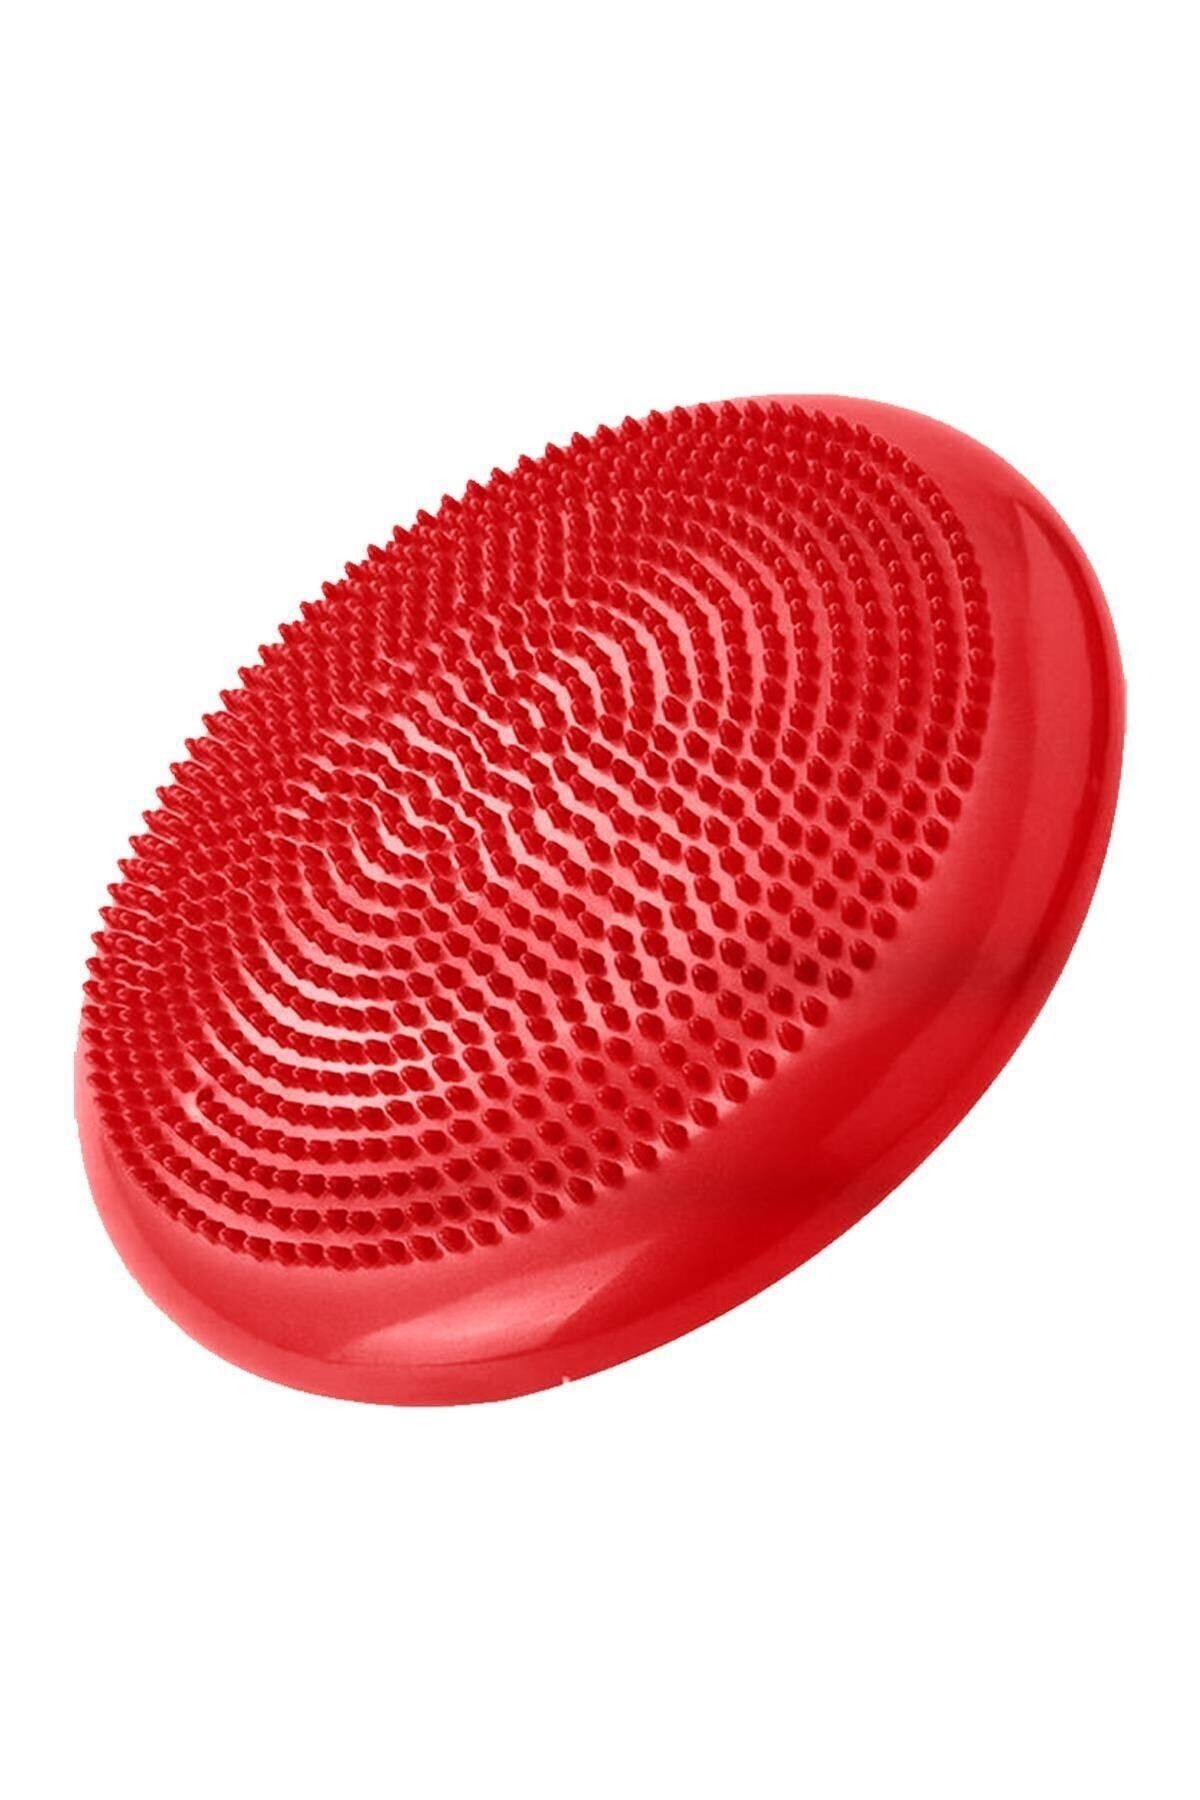 teknotrust Tek Ebat Denge Diski Balance Trainer Denge Topu Pilates Balans Disk (Pompasız) Kırmızı